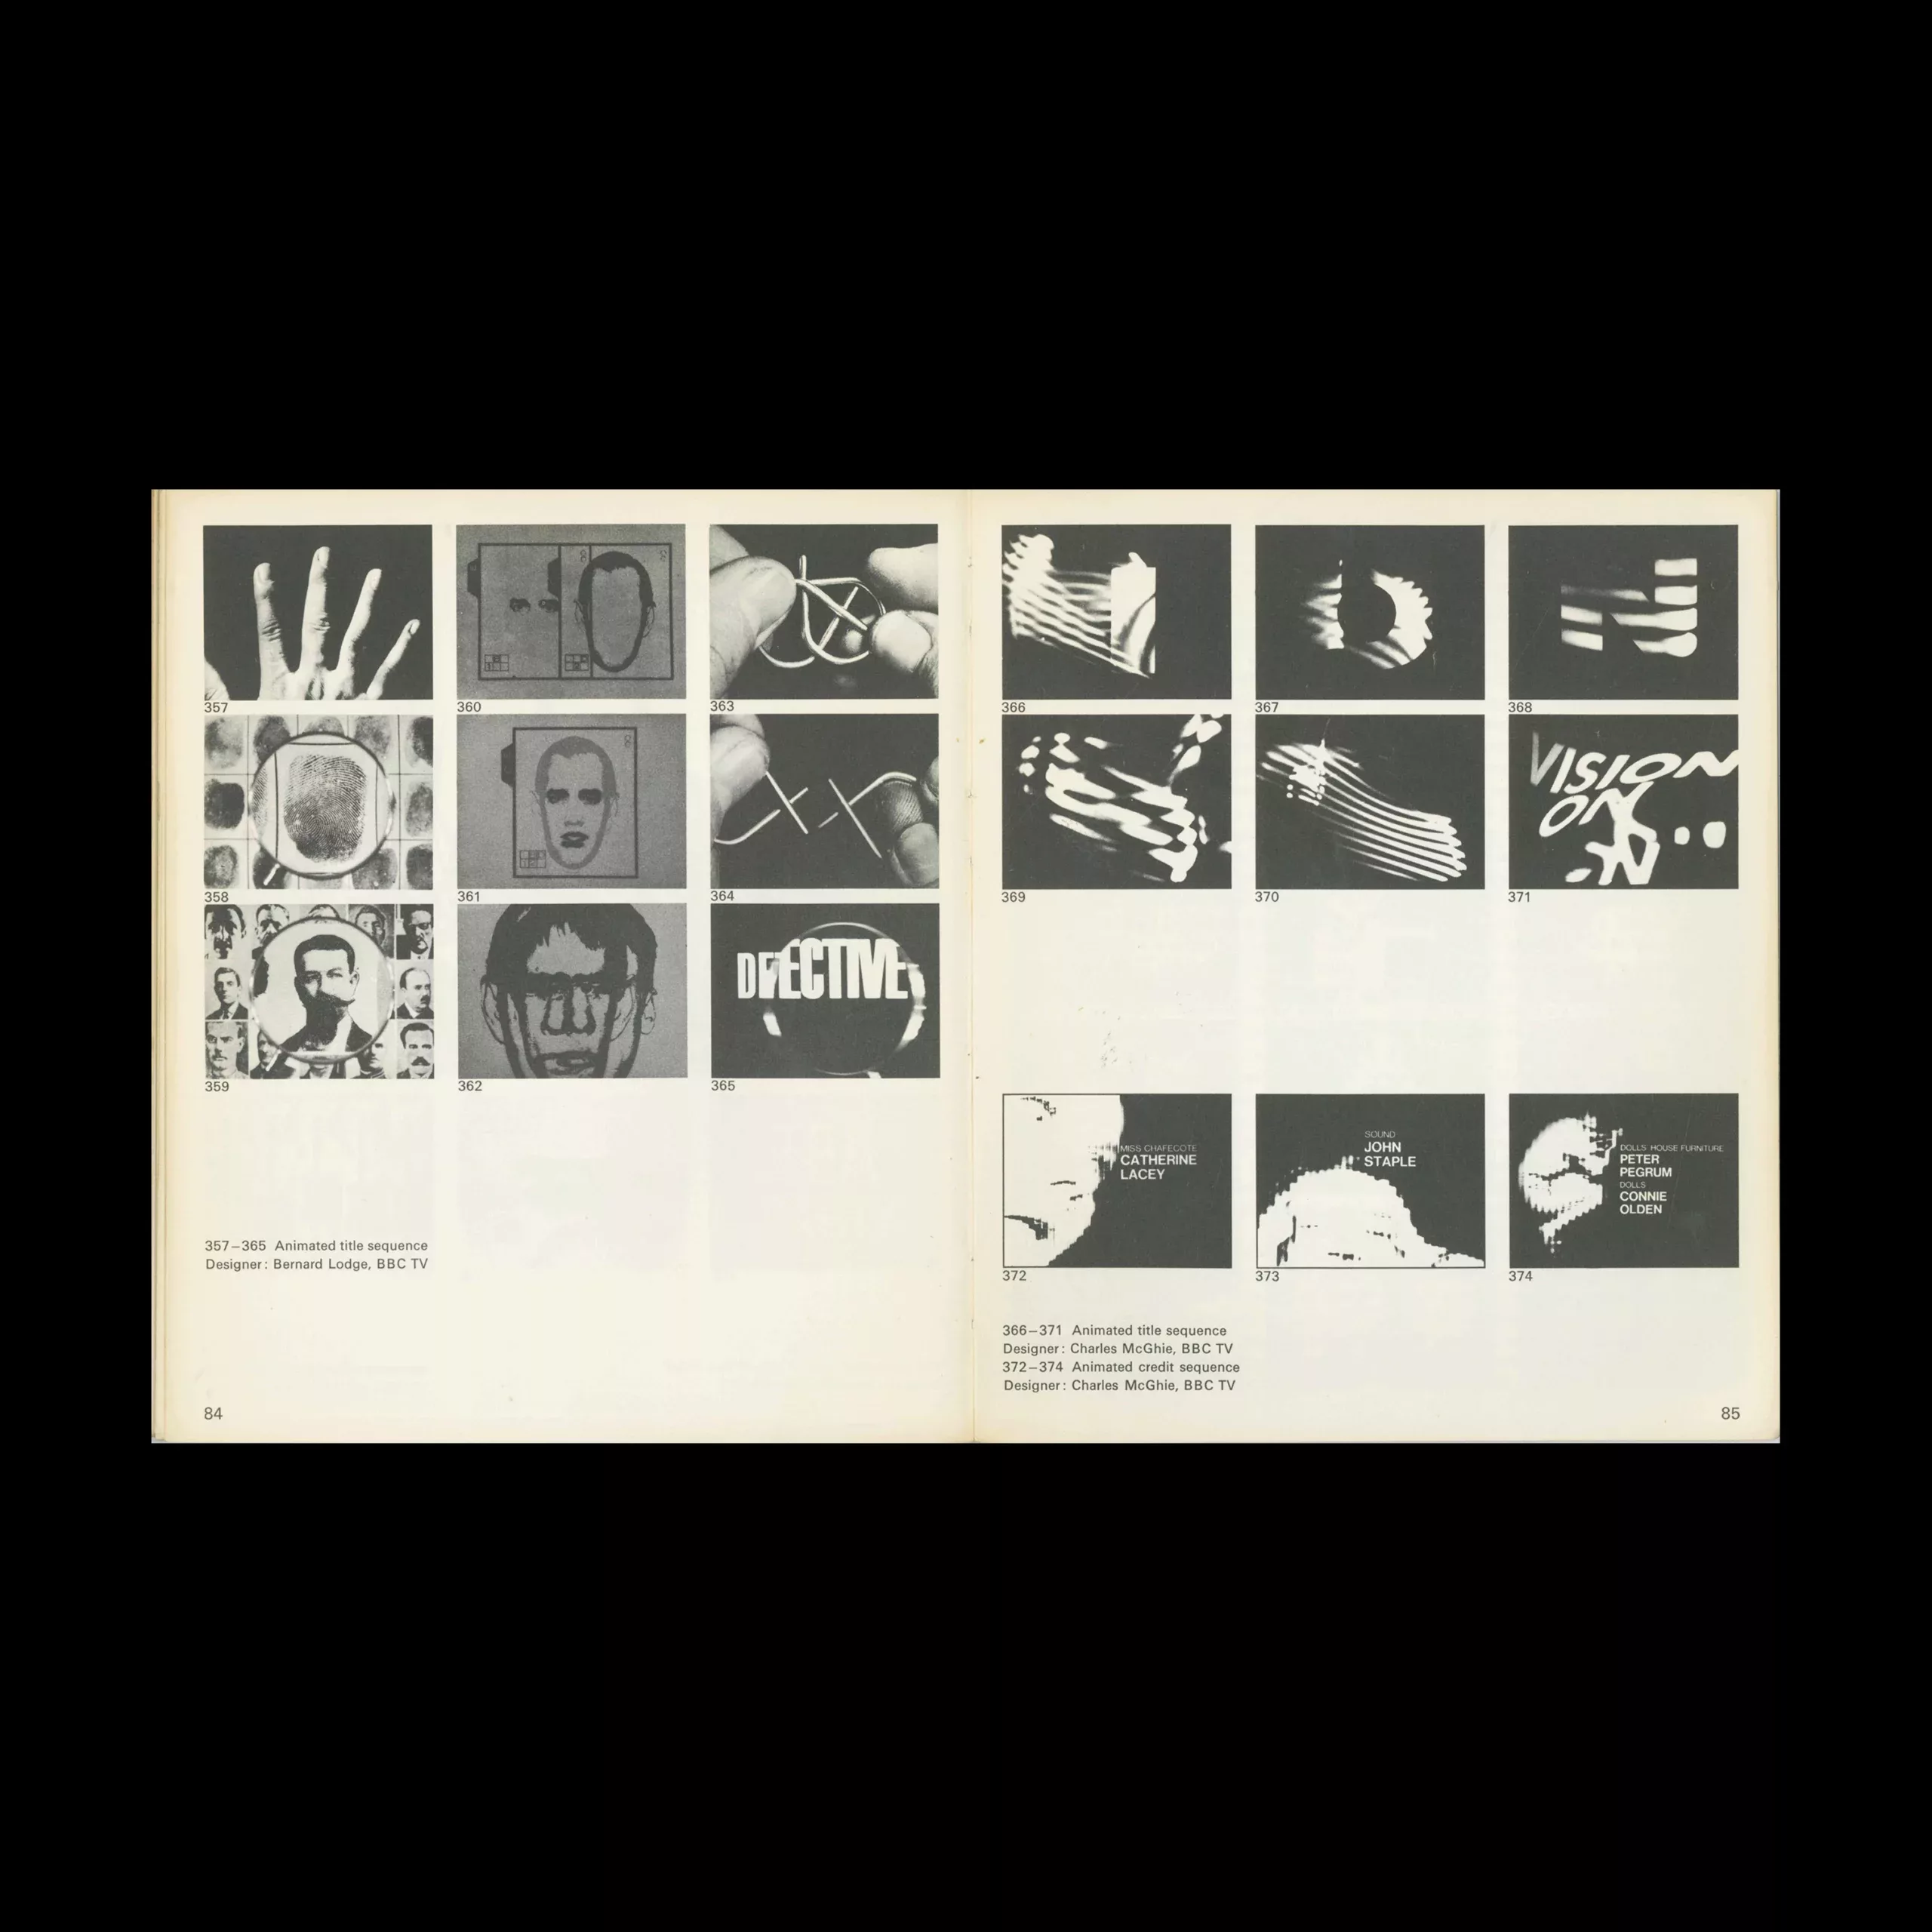 TV / Television Graphics, Studio Vista London, 1966